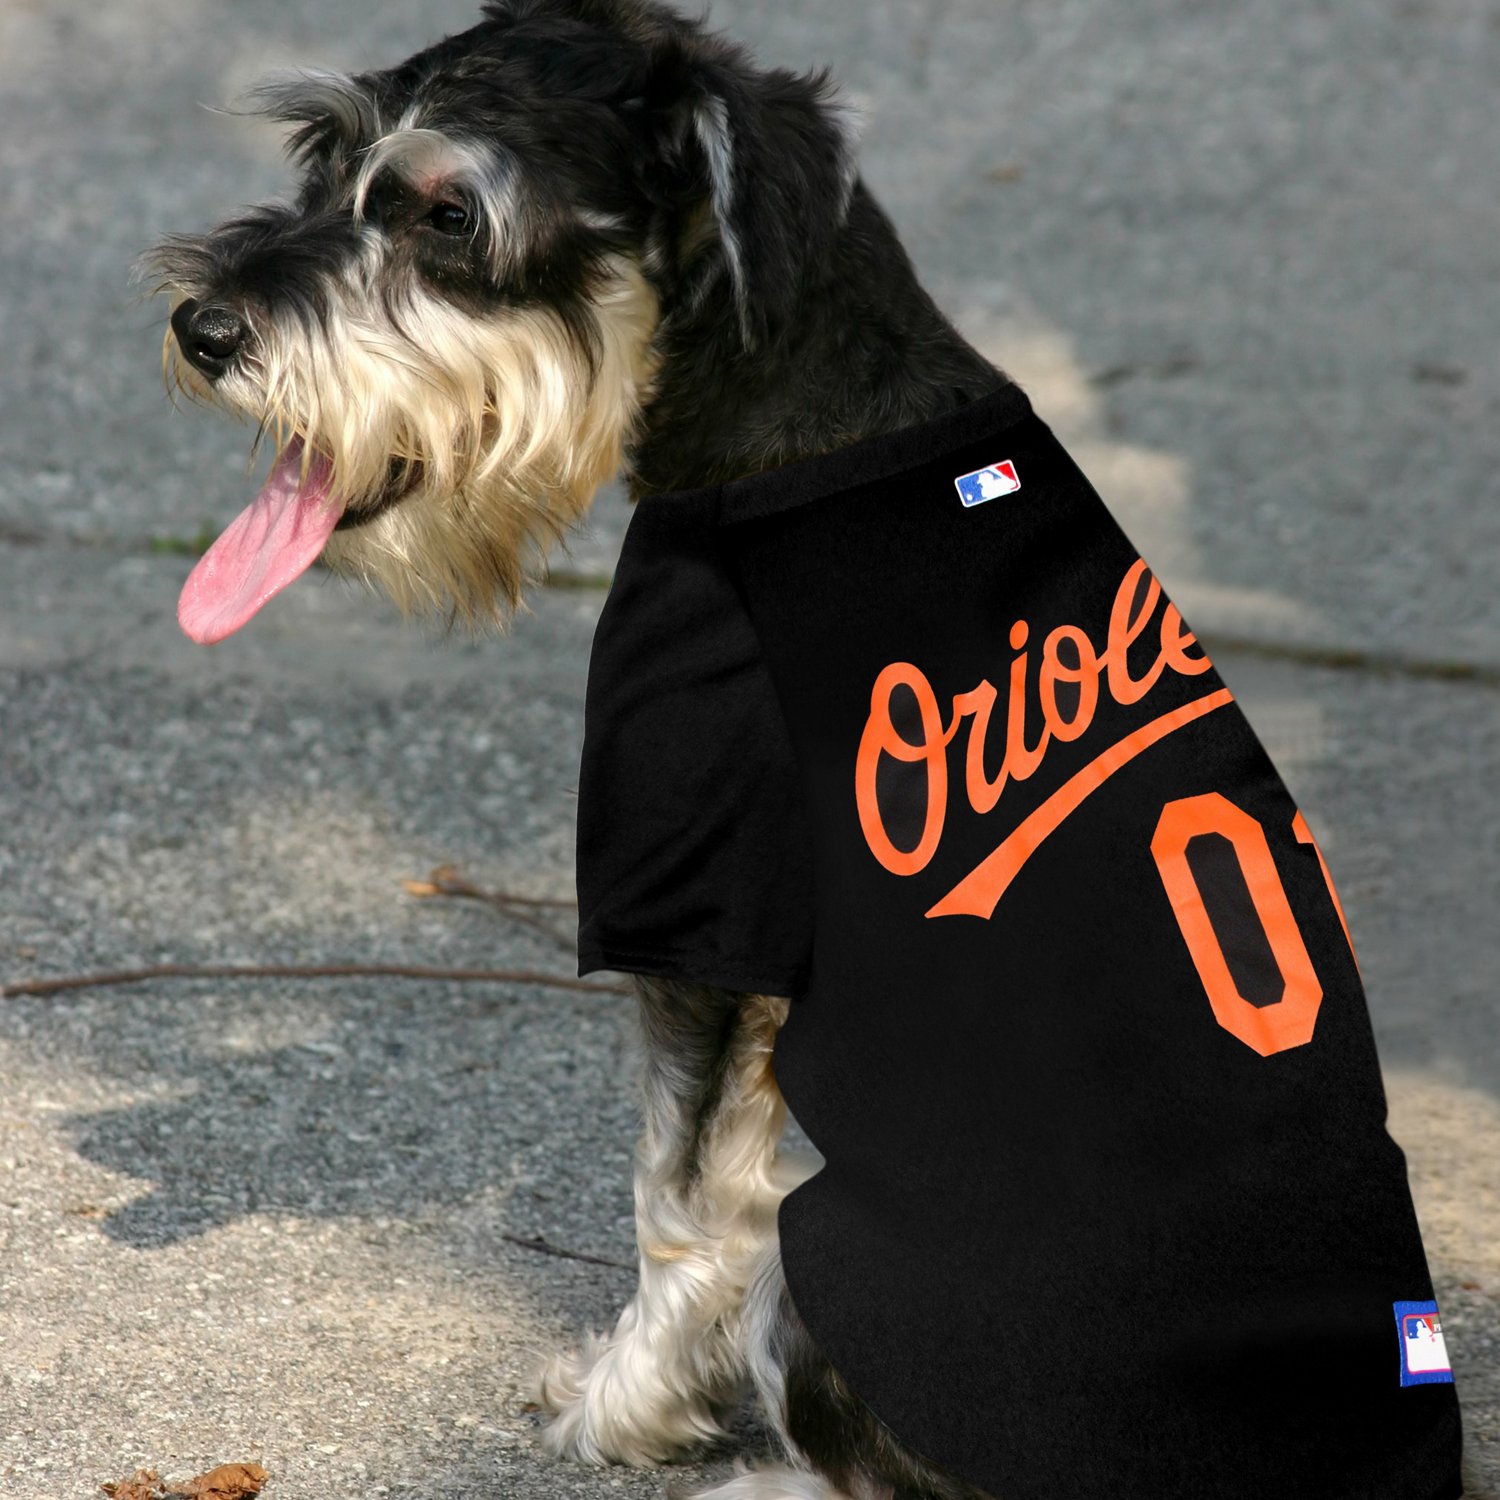 Baltimore Orioles Pet Jersey